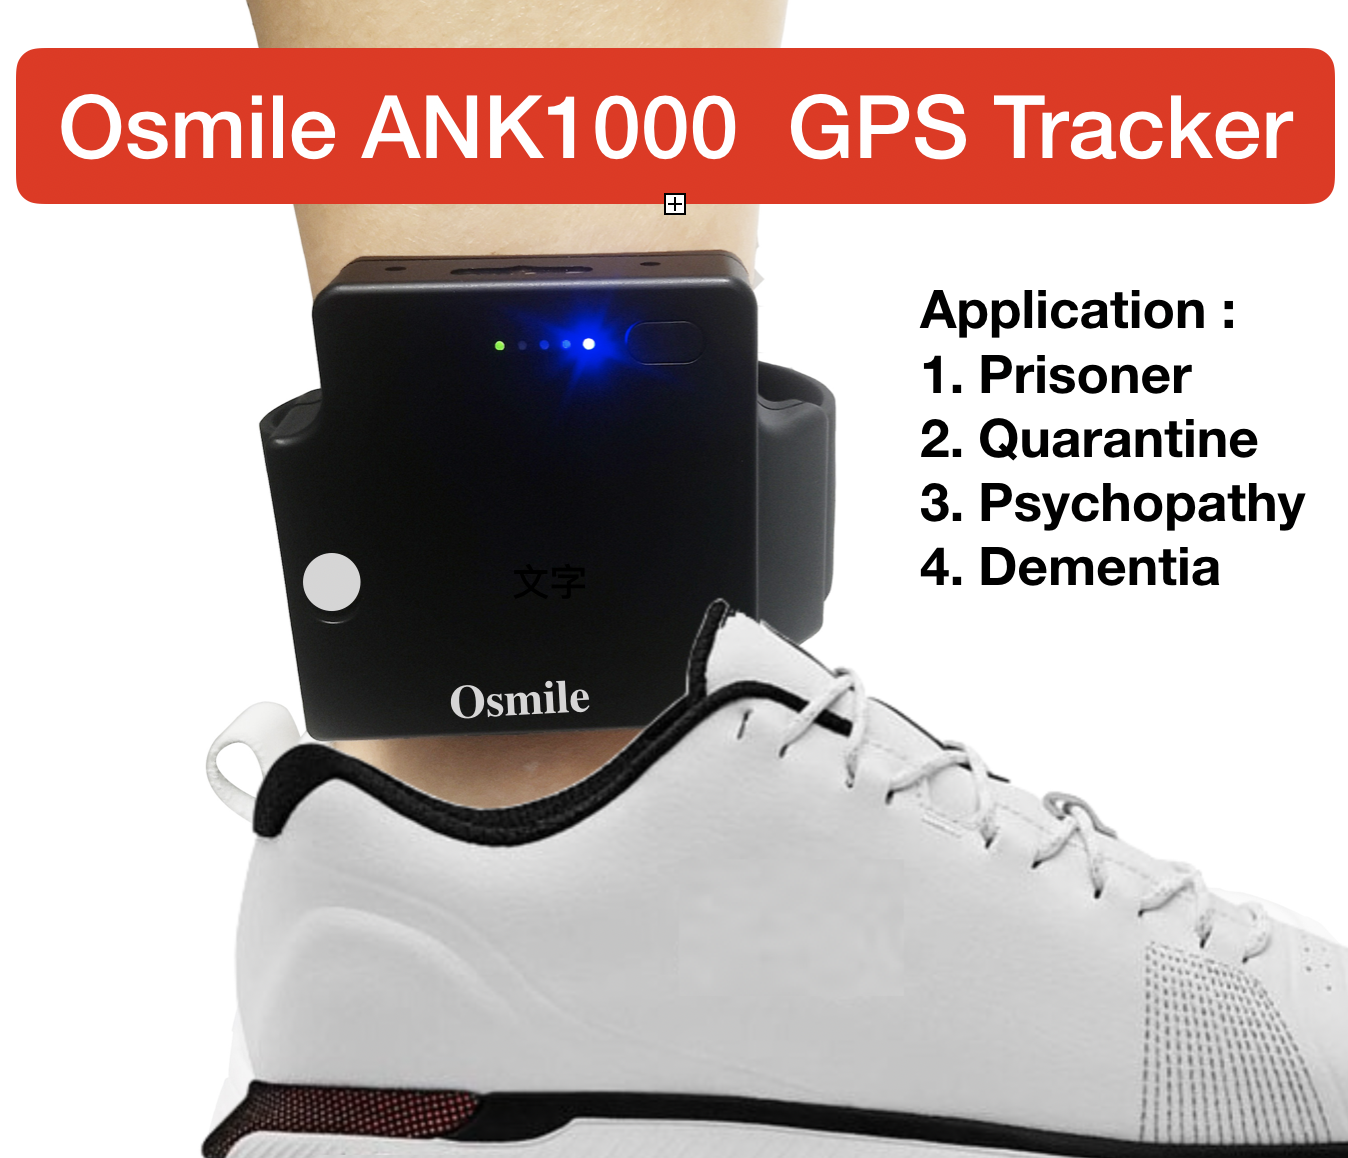 Osmile ANK1000 GPS Tracker for Prisoner, Quarantine, Psychopathy, Dementia & Alzheimer\'s patients